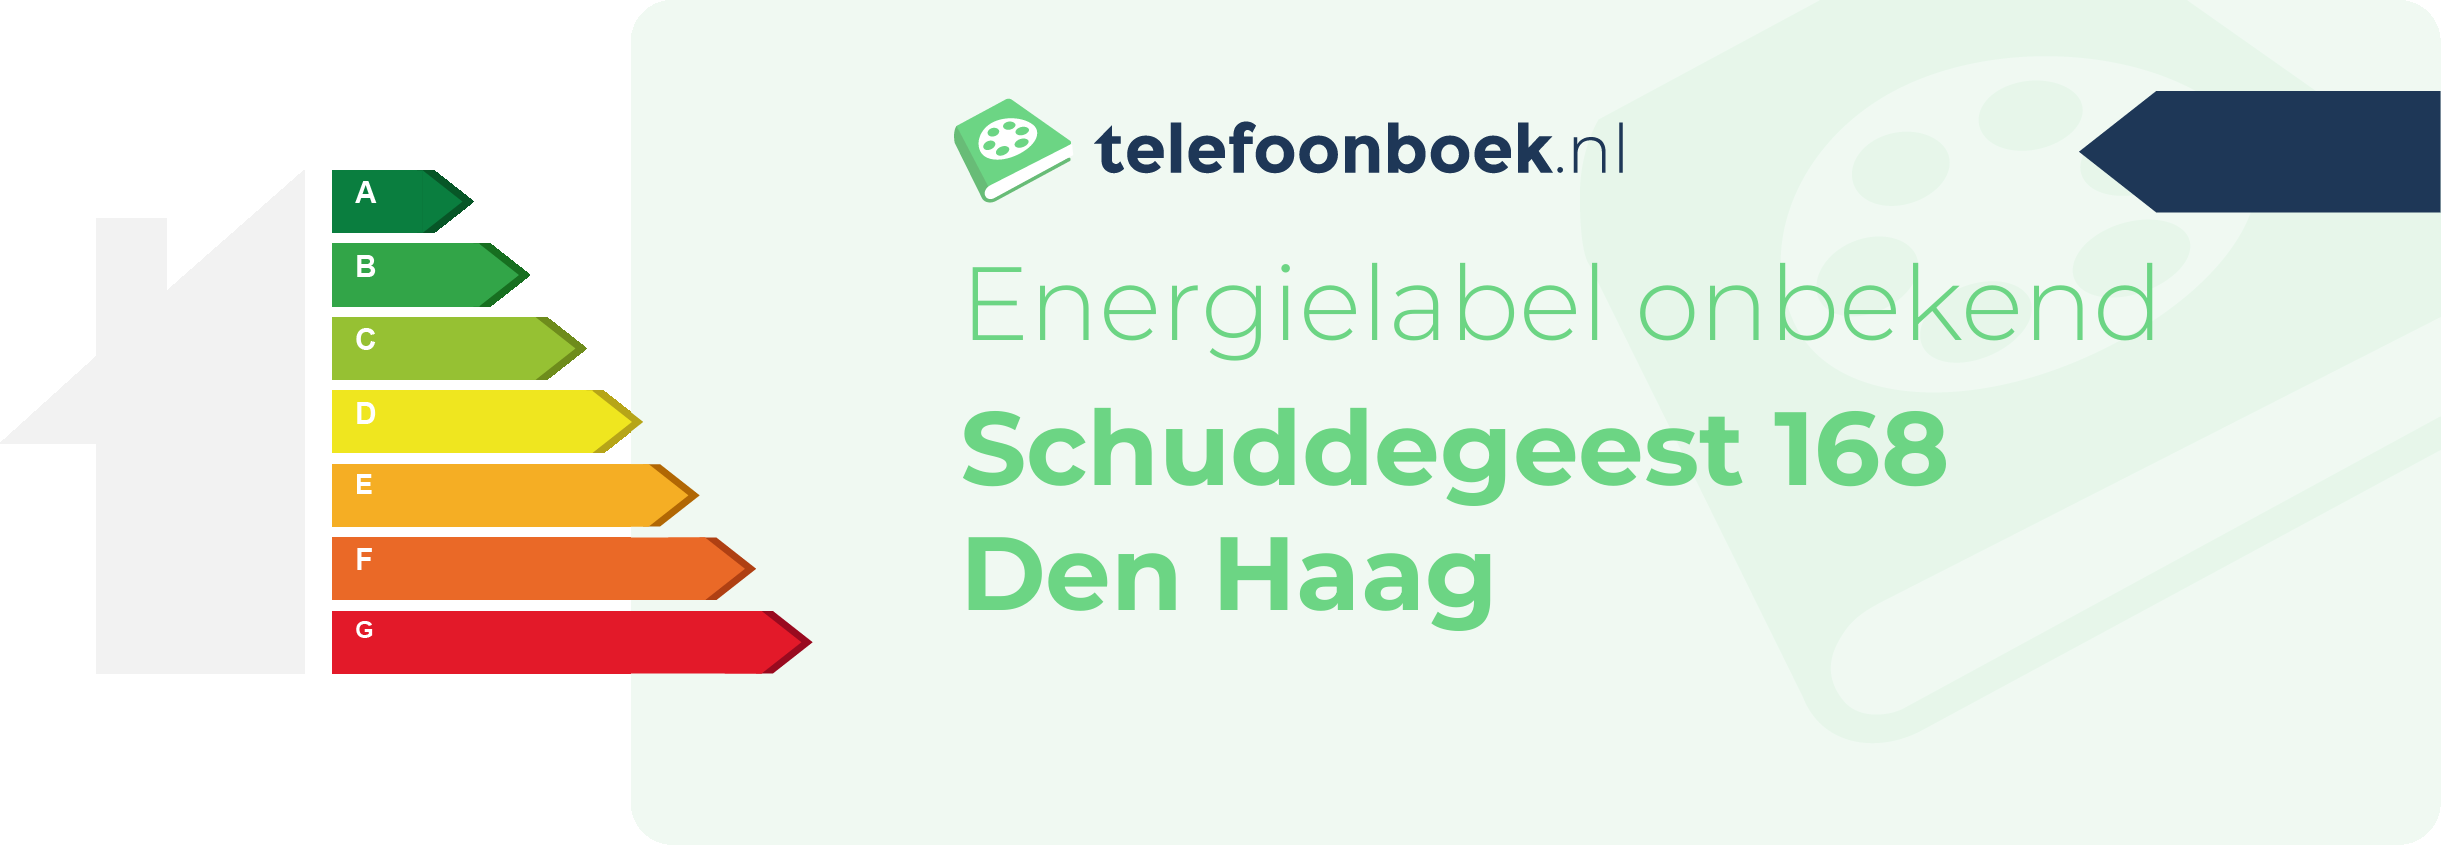 Energielabel Schuddegeest 168 Den Haag